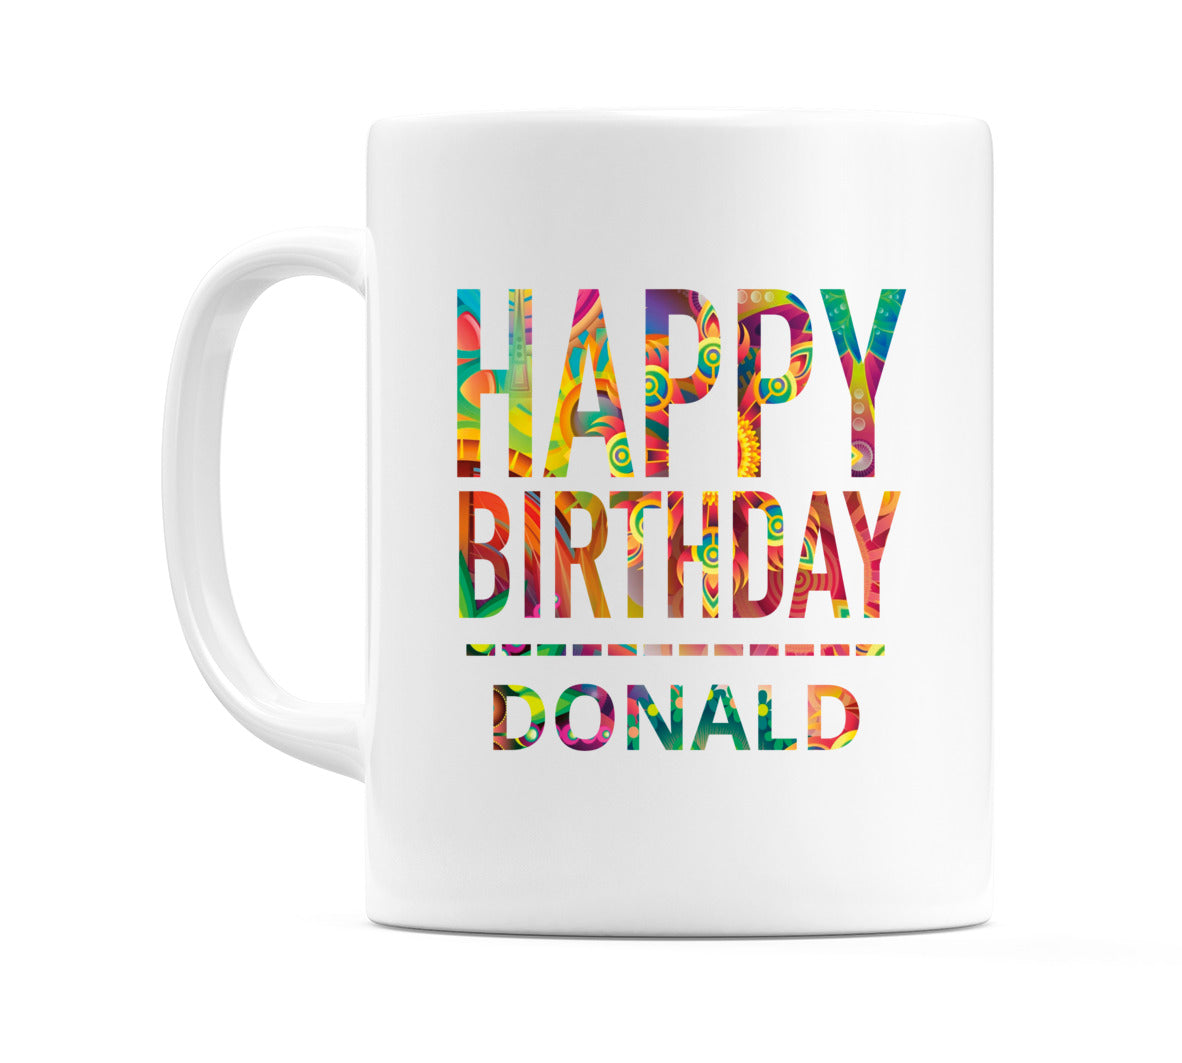 Happy Birthday Donald (Tie Dye Effect) Mug Cup by WeDoMugs